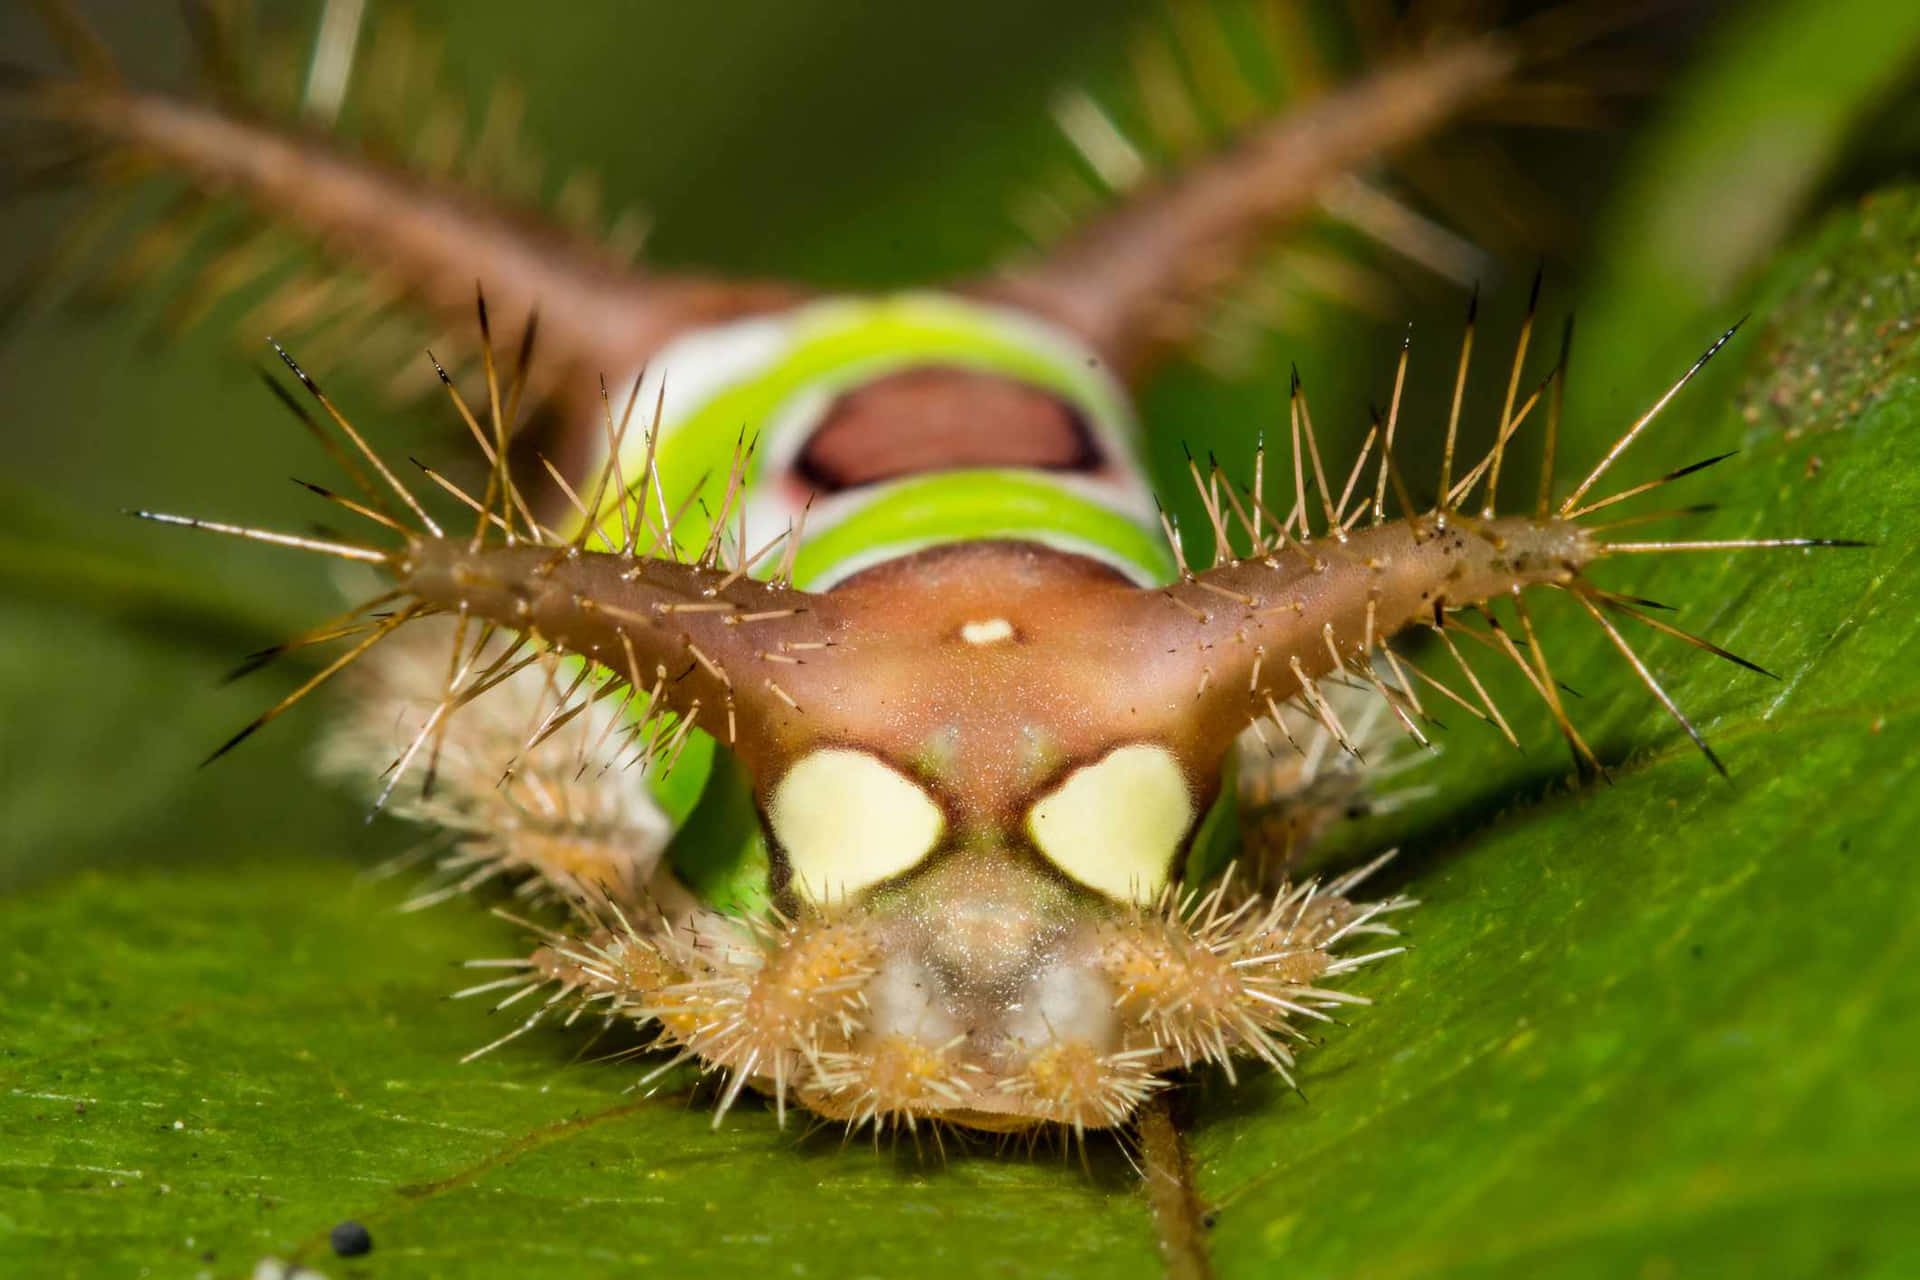 A Caterpillar With Long Hair On A Leaf